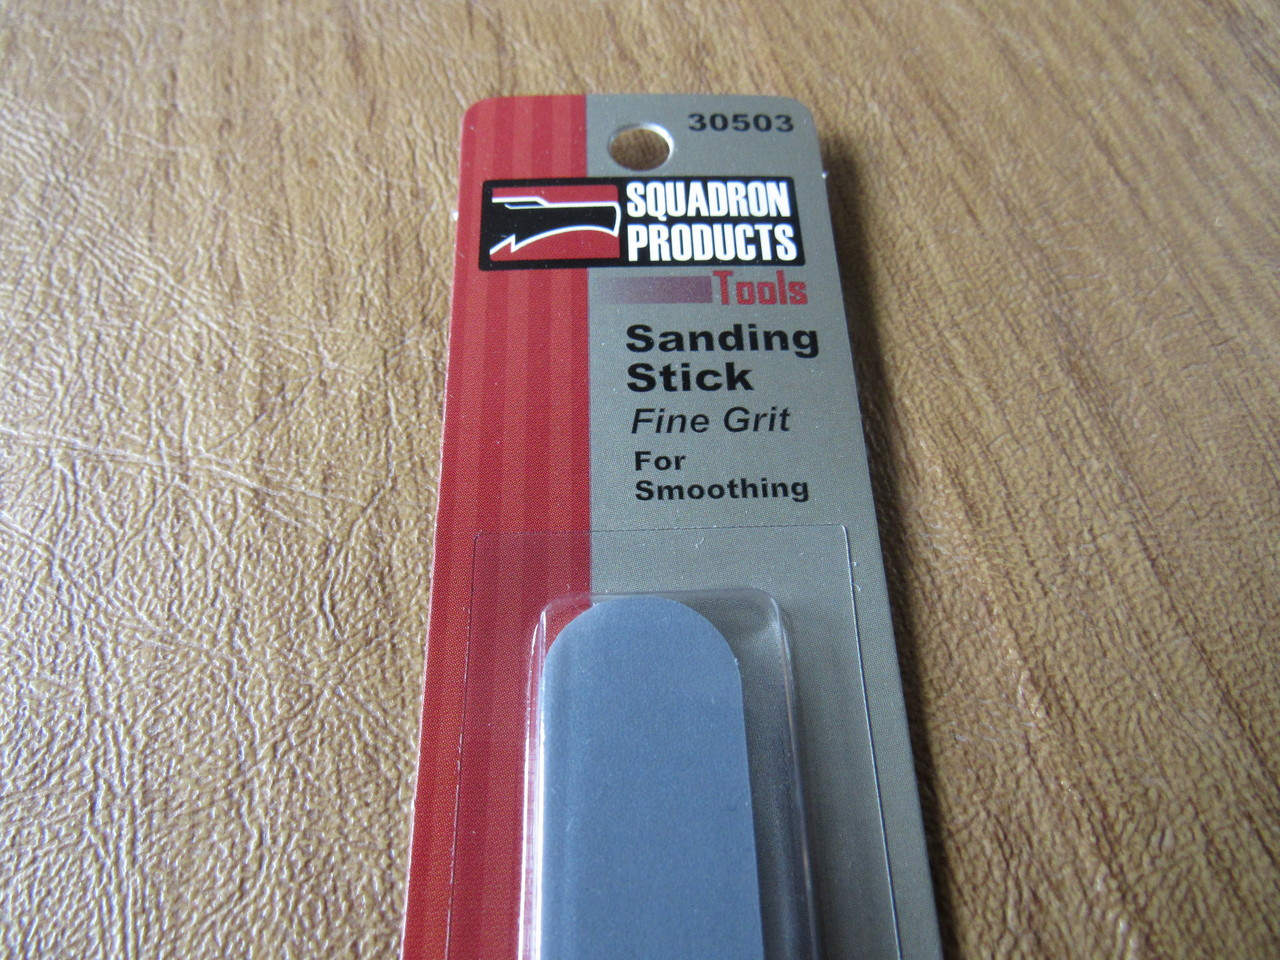 Squadron Sanding Stick fine # 30503 